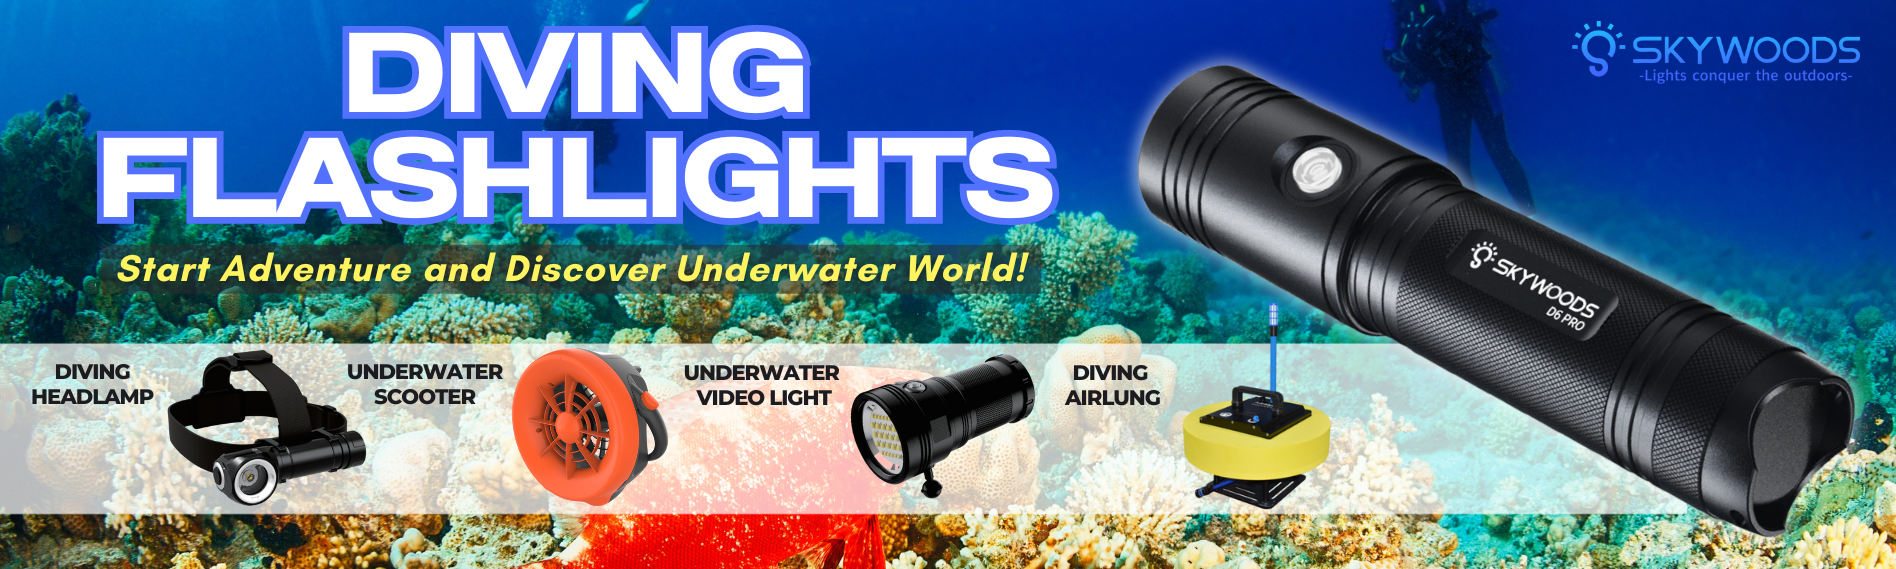 web banner for diving